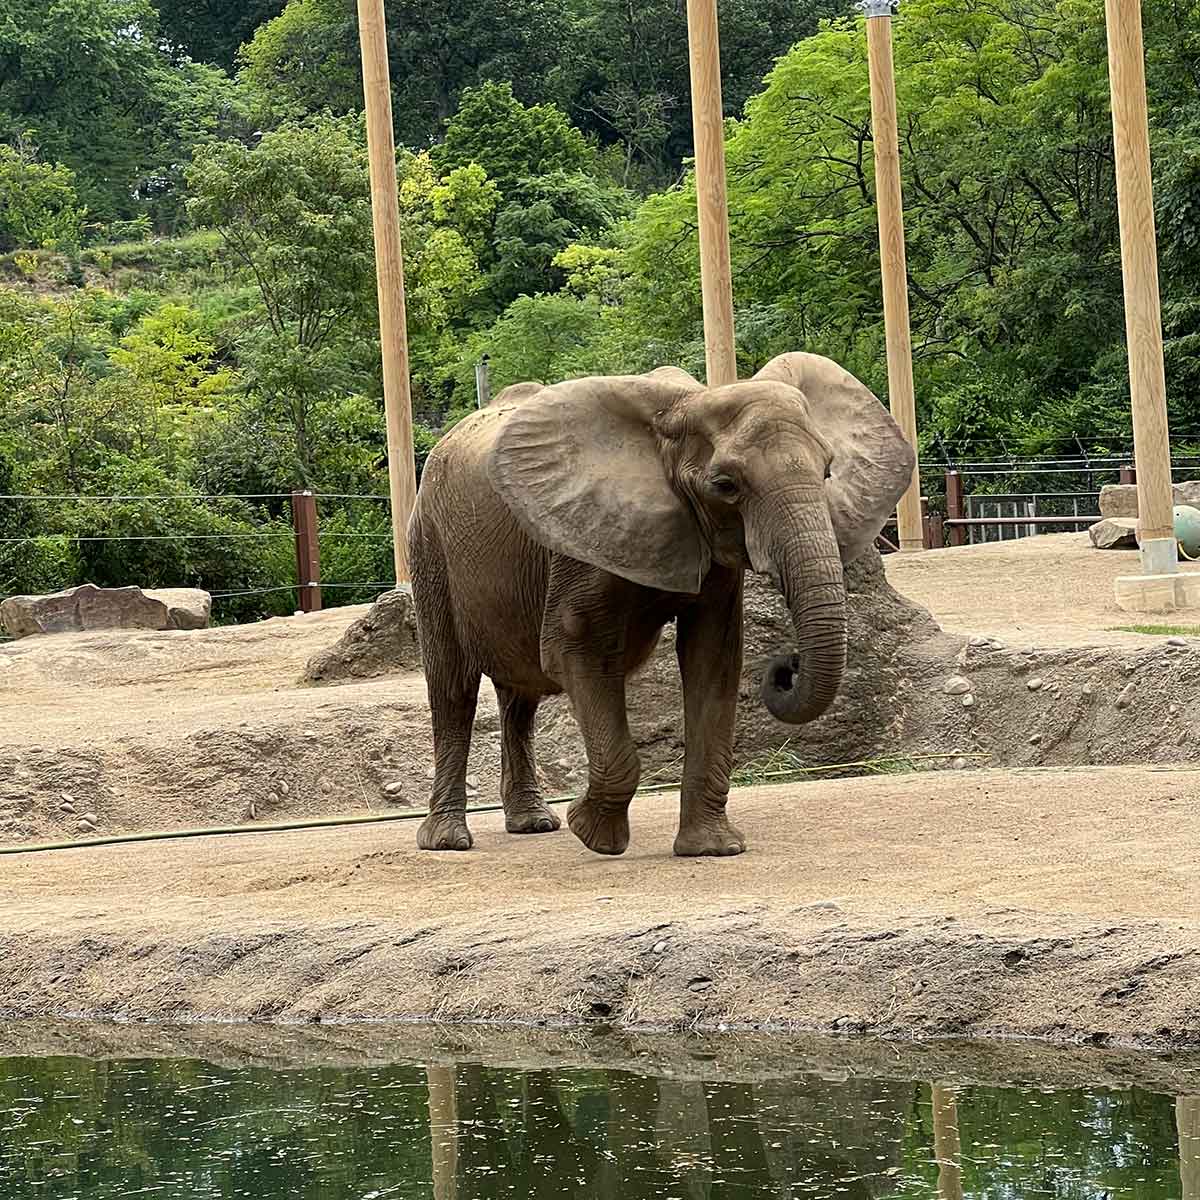 Elephant at a zoo.